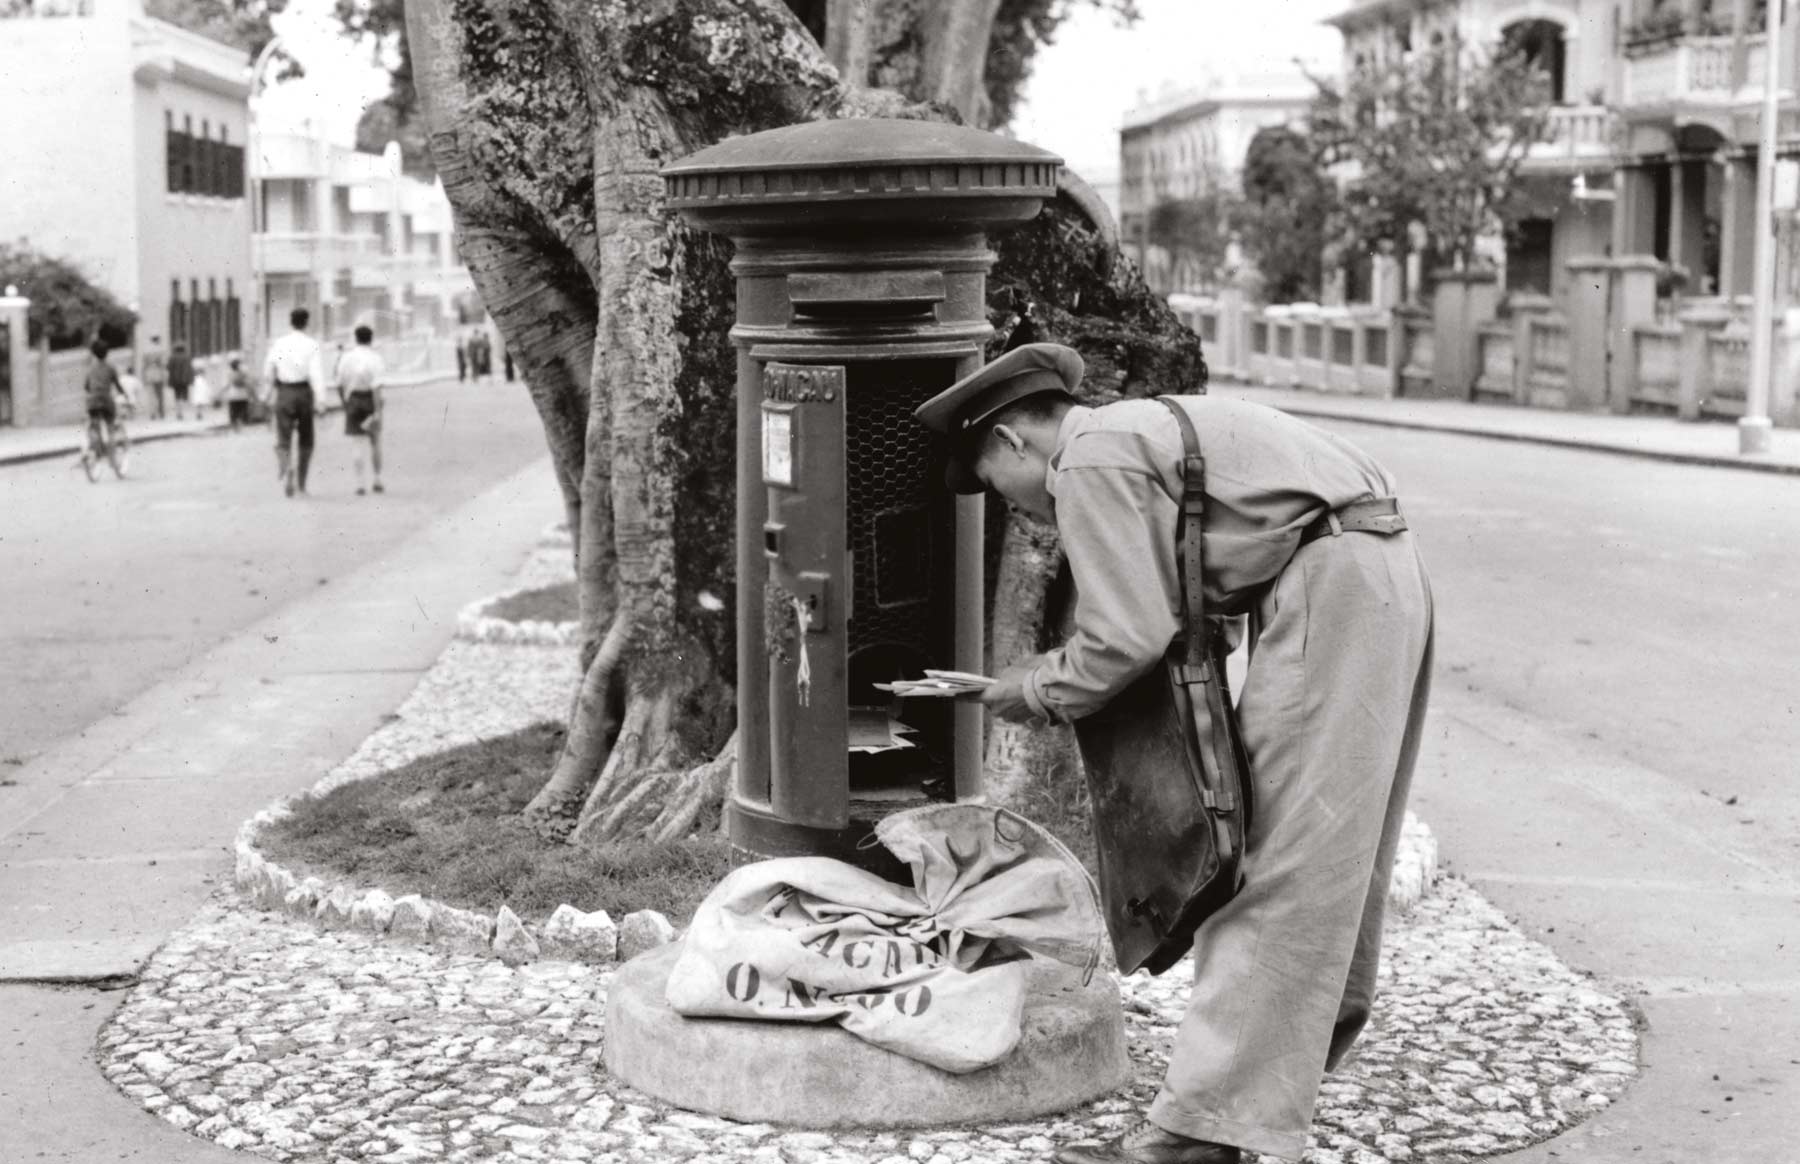  Distribuidor a recolher correio na década de 1950